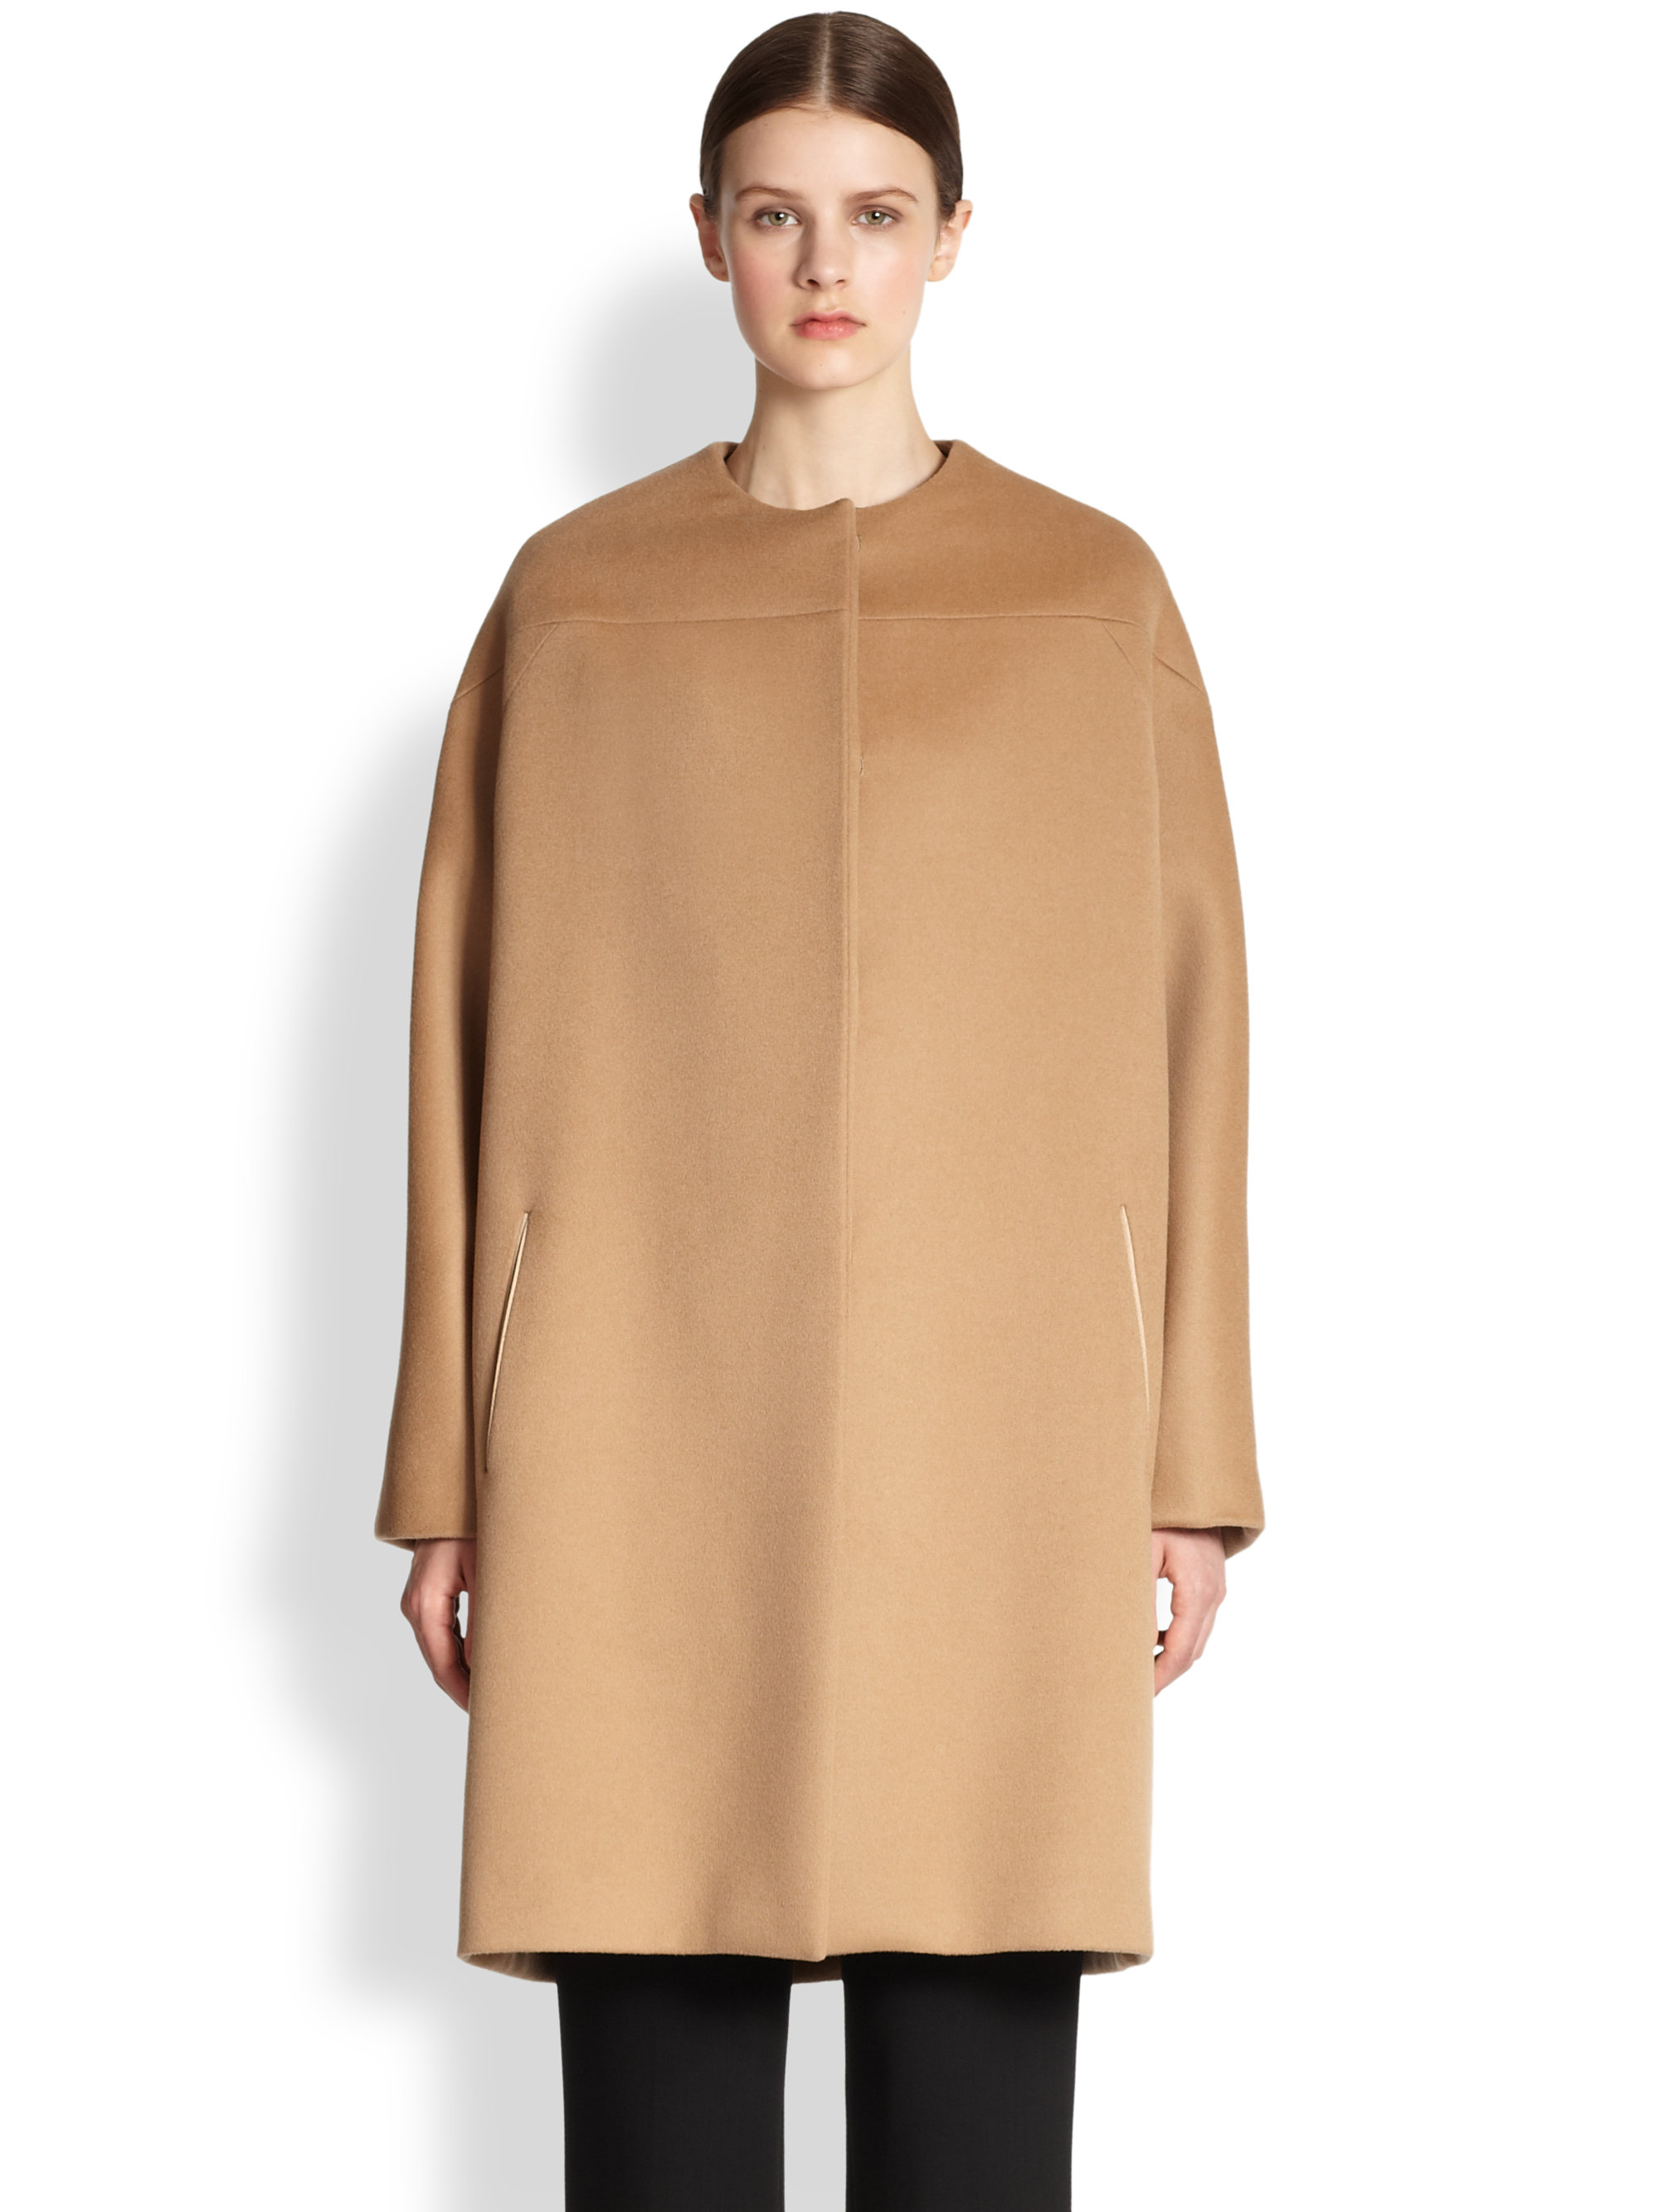 Lyst - Derek Lam Wool Angora Cocoon Coat in Natural